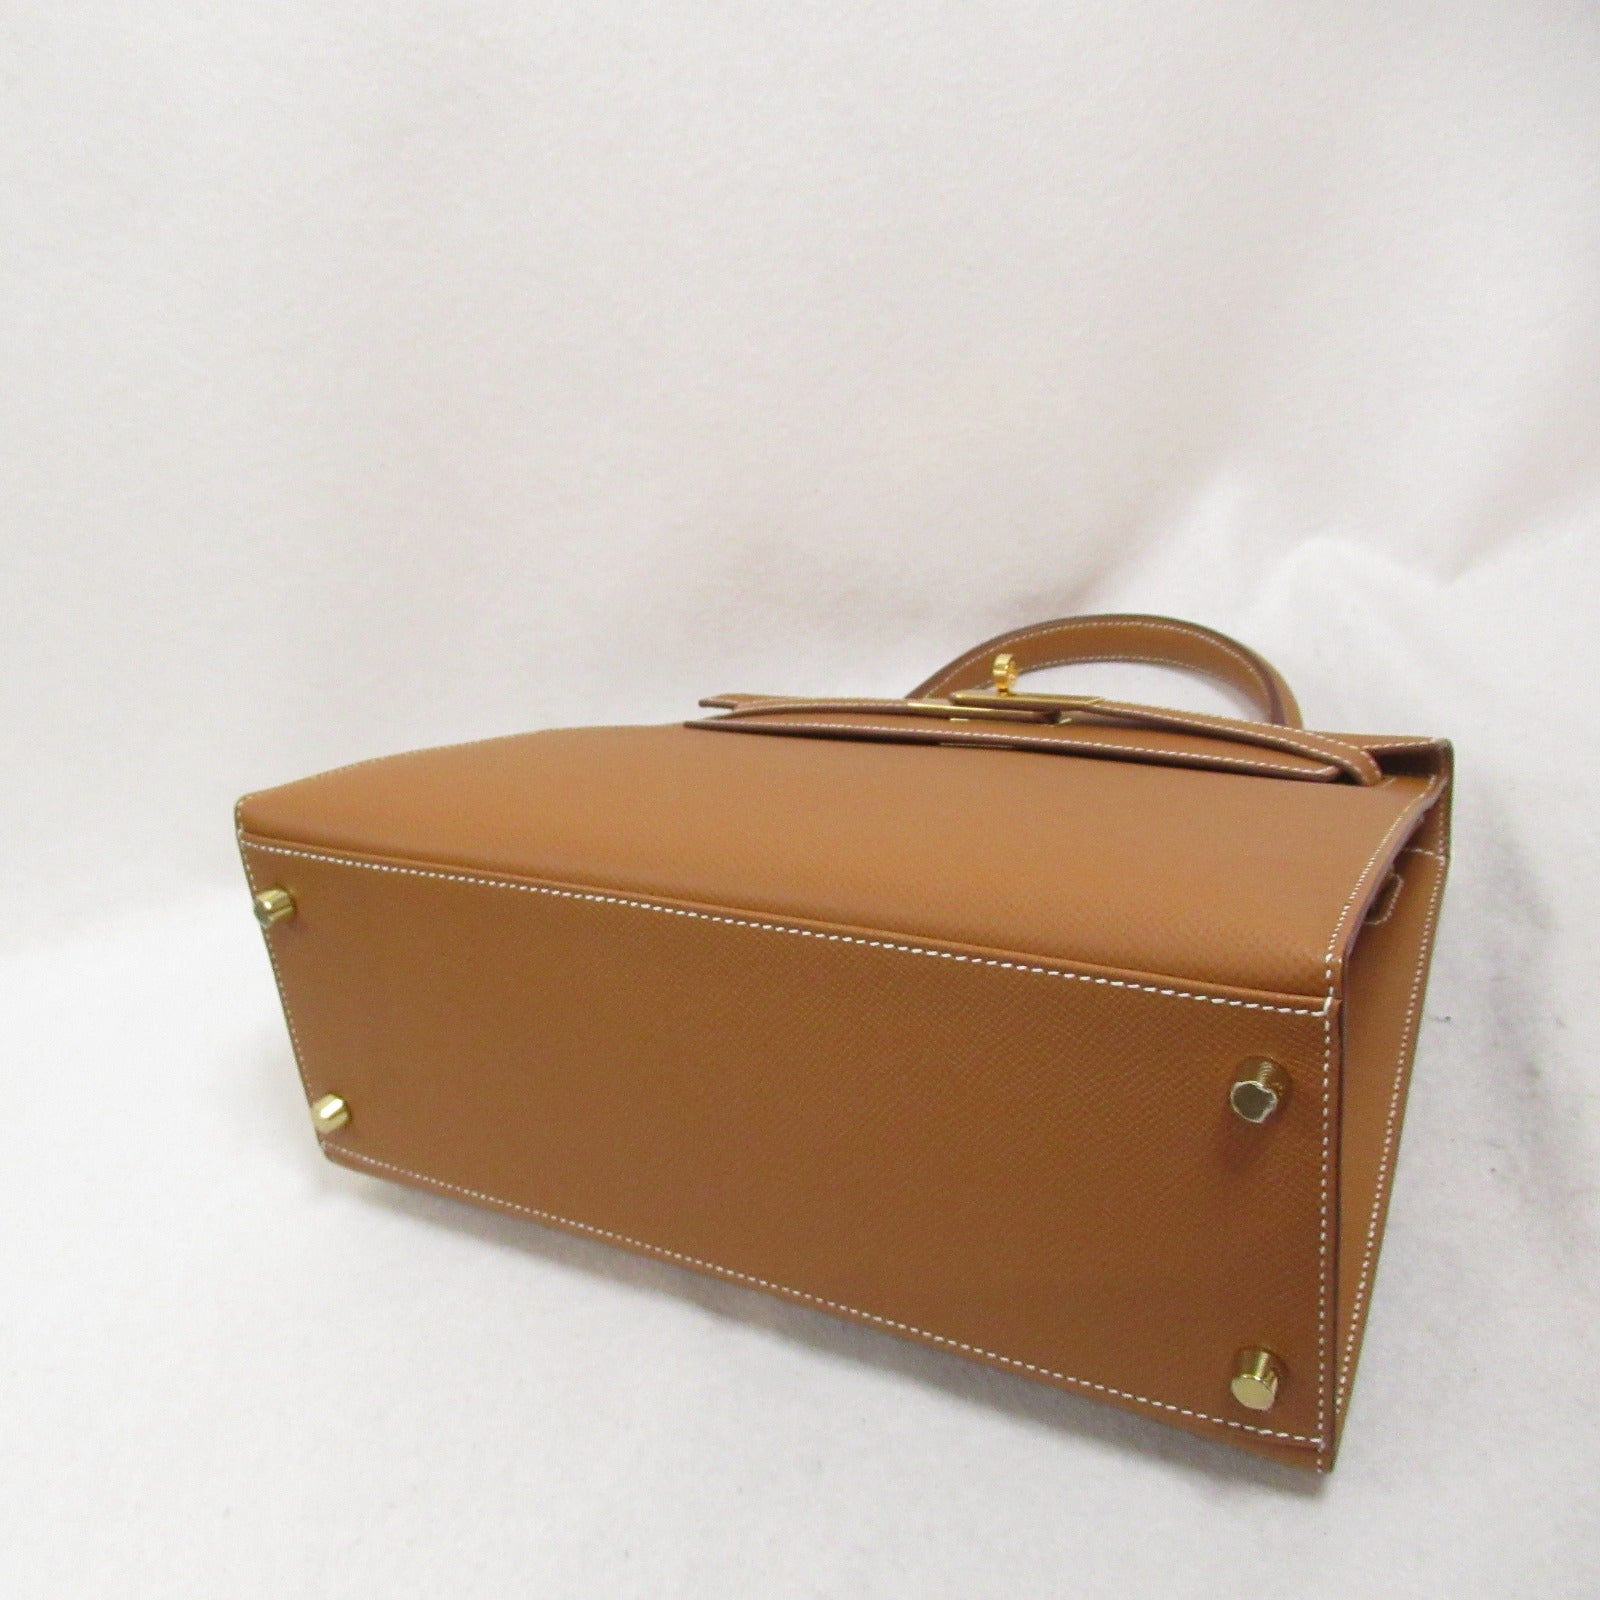 Hermes Kelly 28 Handbag  Sewing Handbag Handbag Leather Epsom  Brown